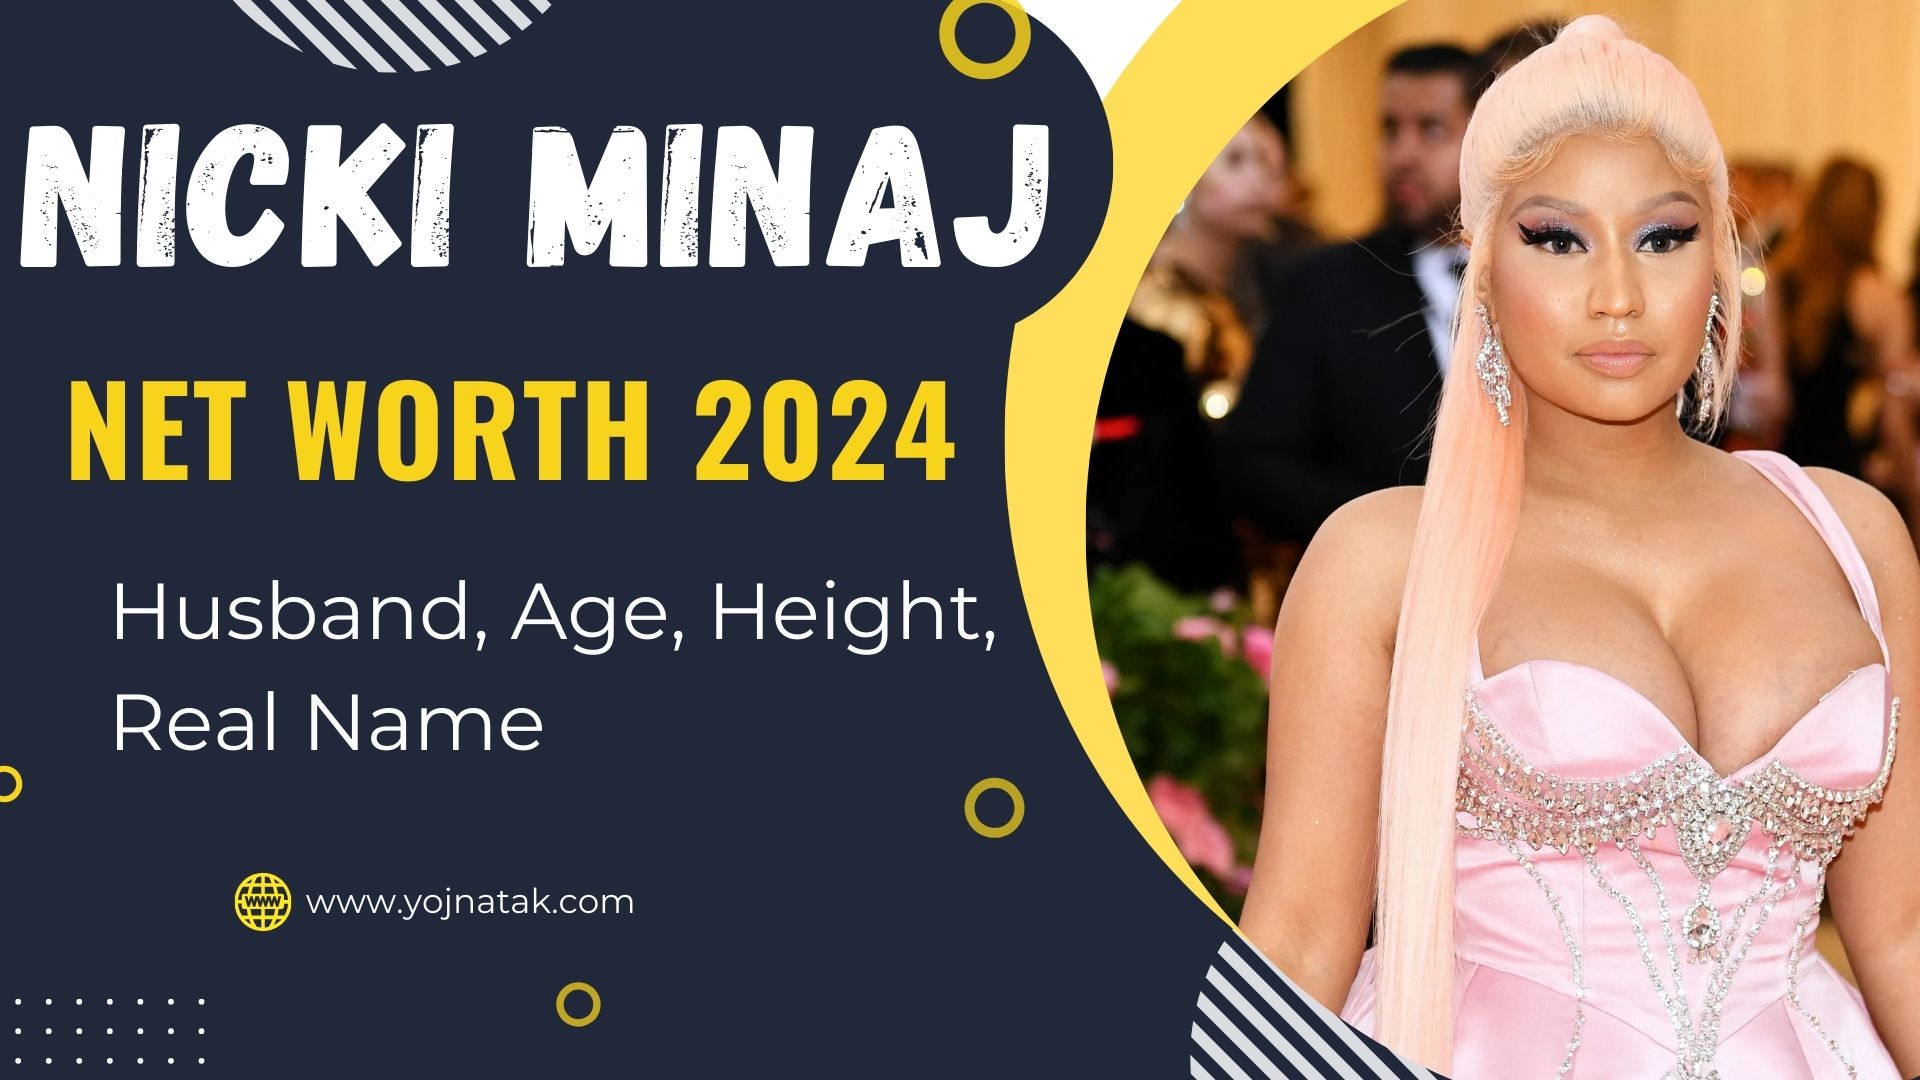 Nicki Minaj Net Worth 2024 Husband, Age, Height, Real Name